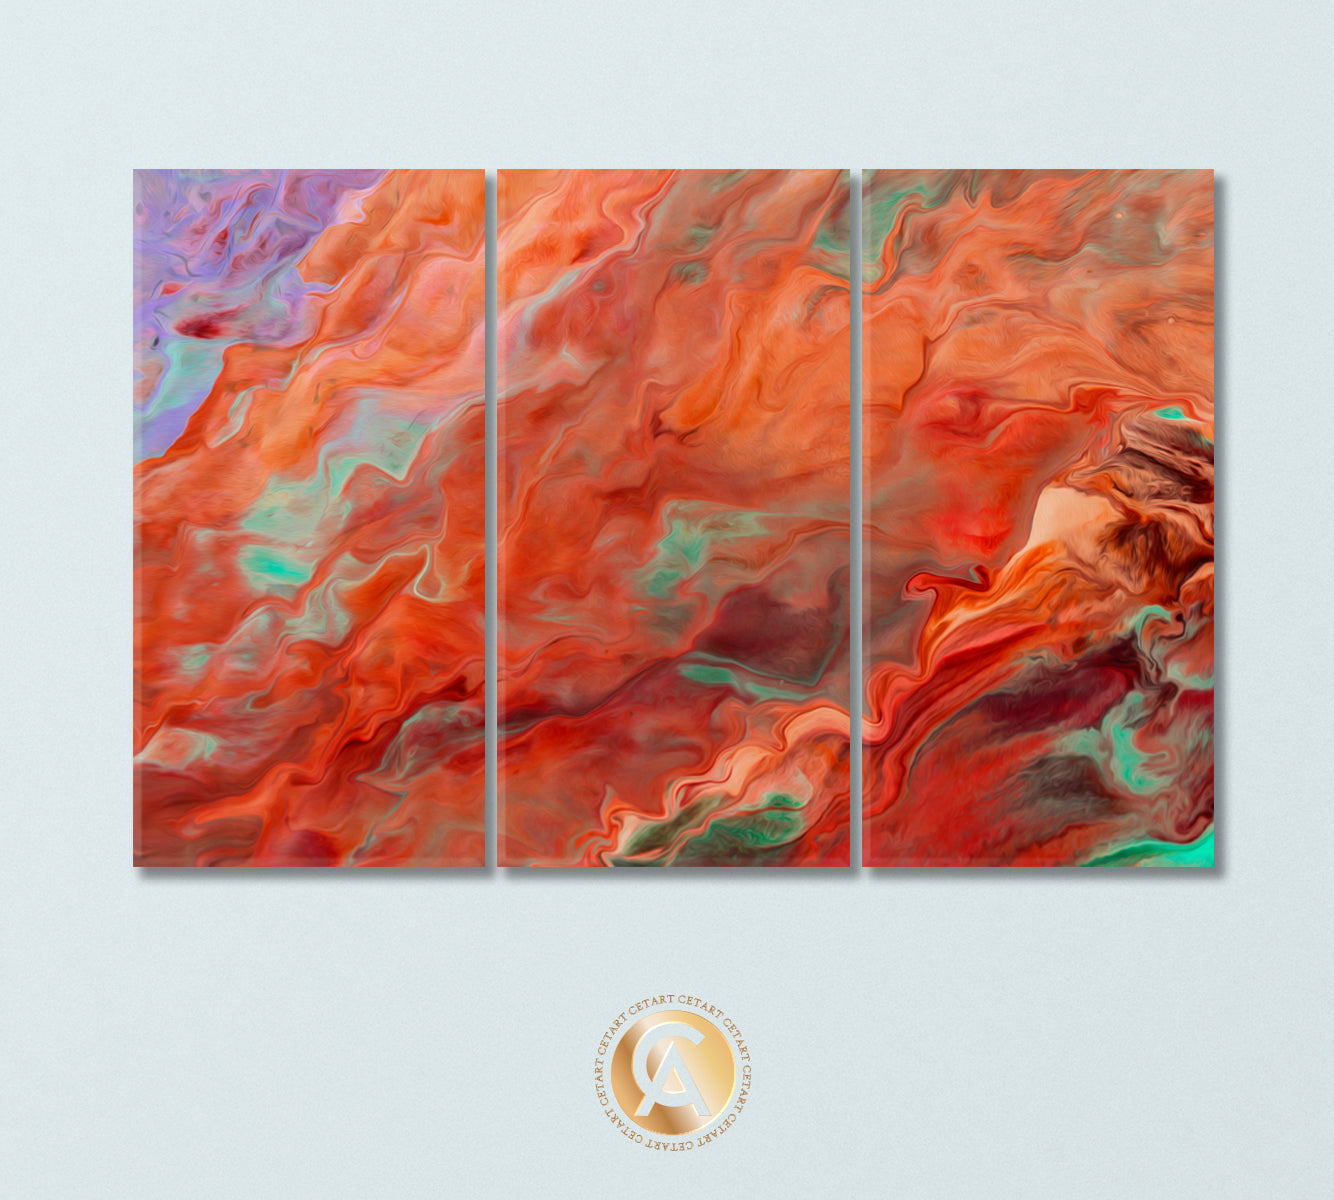 Creative Colorful Abstraction Canvas Print-Canvas Print-CetArt-3 Panels-36x24 inches-CetArt